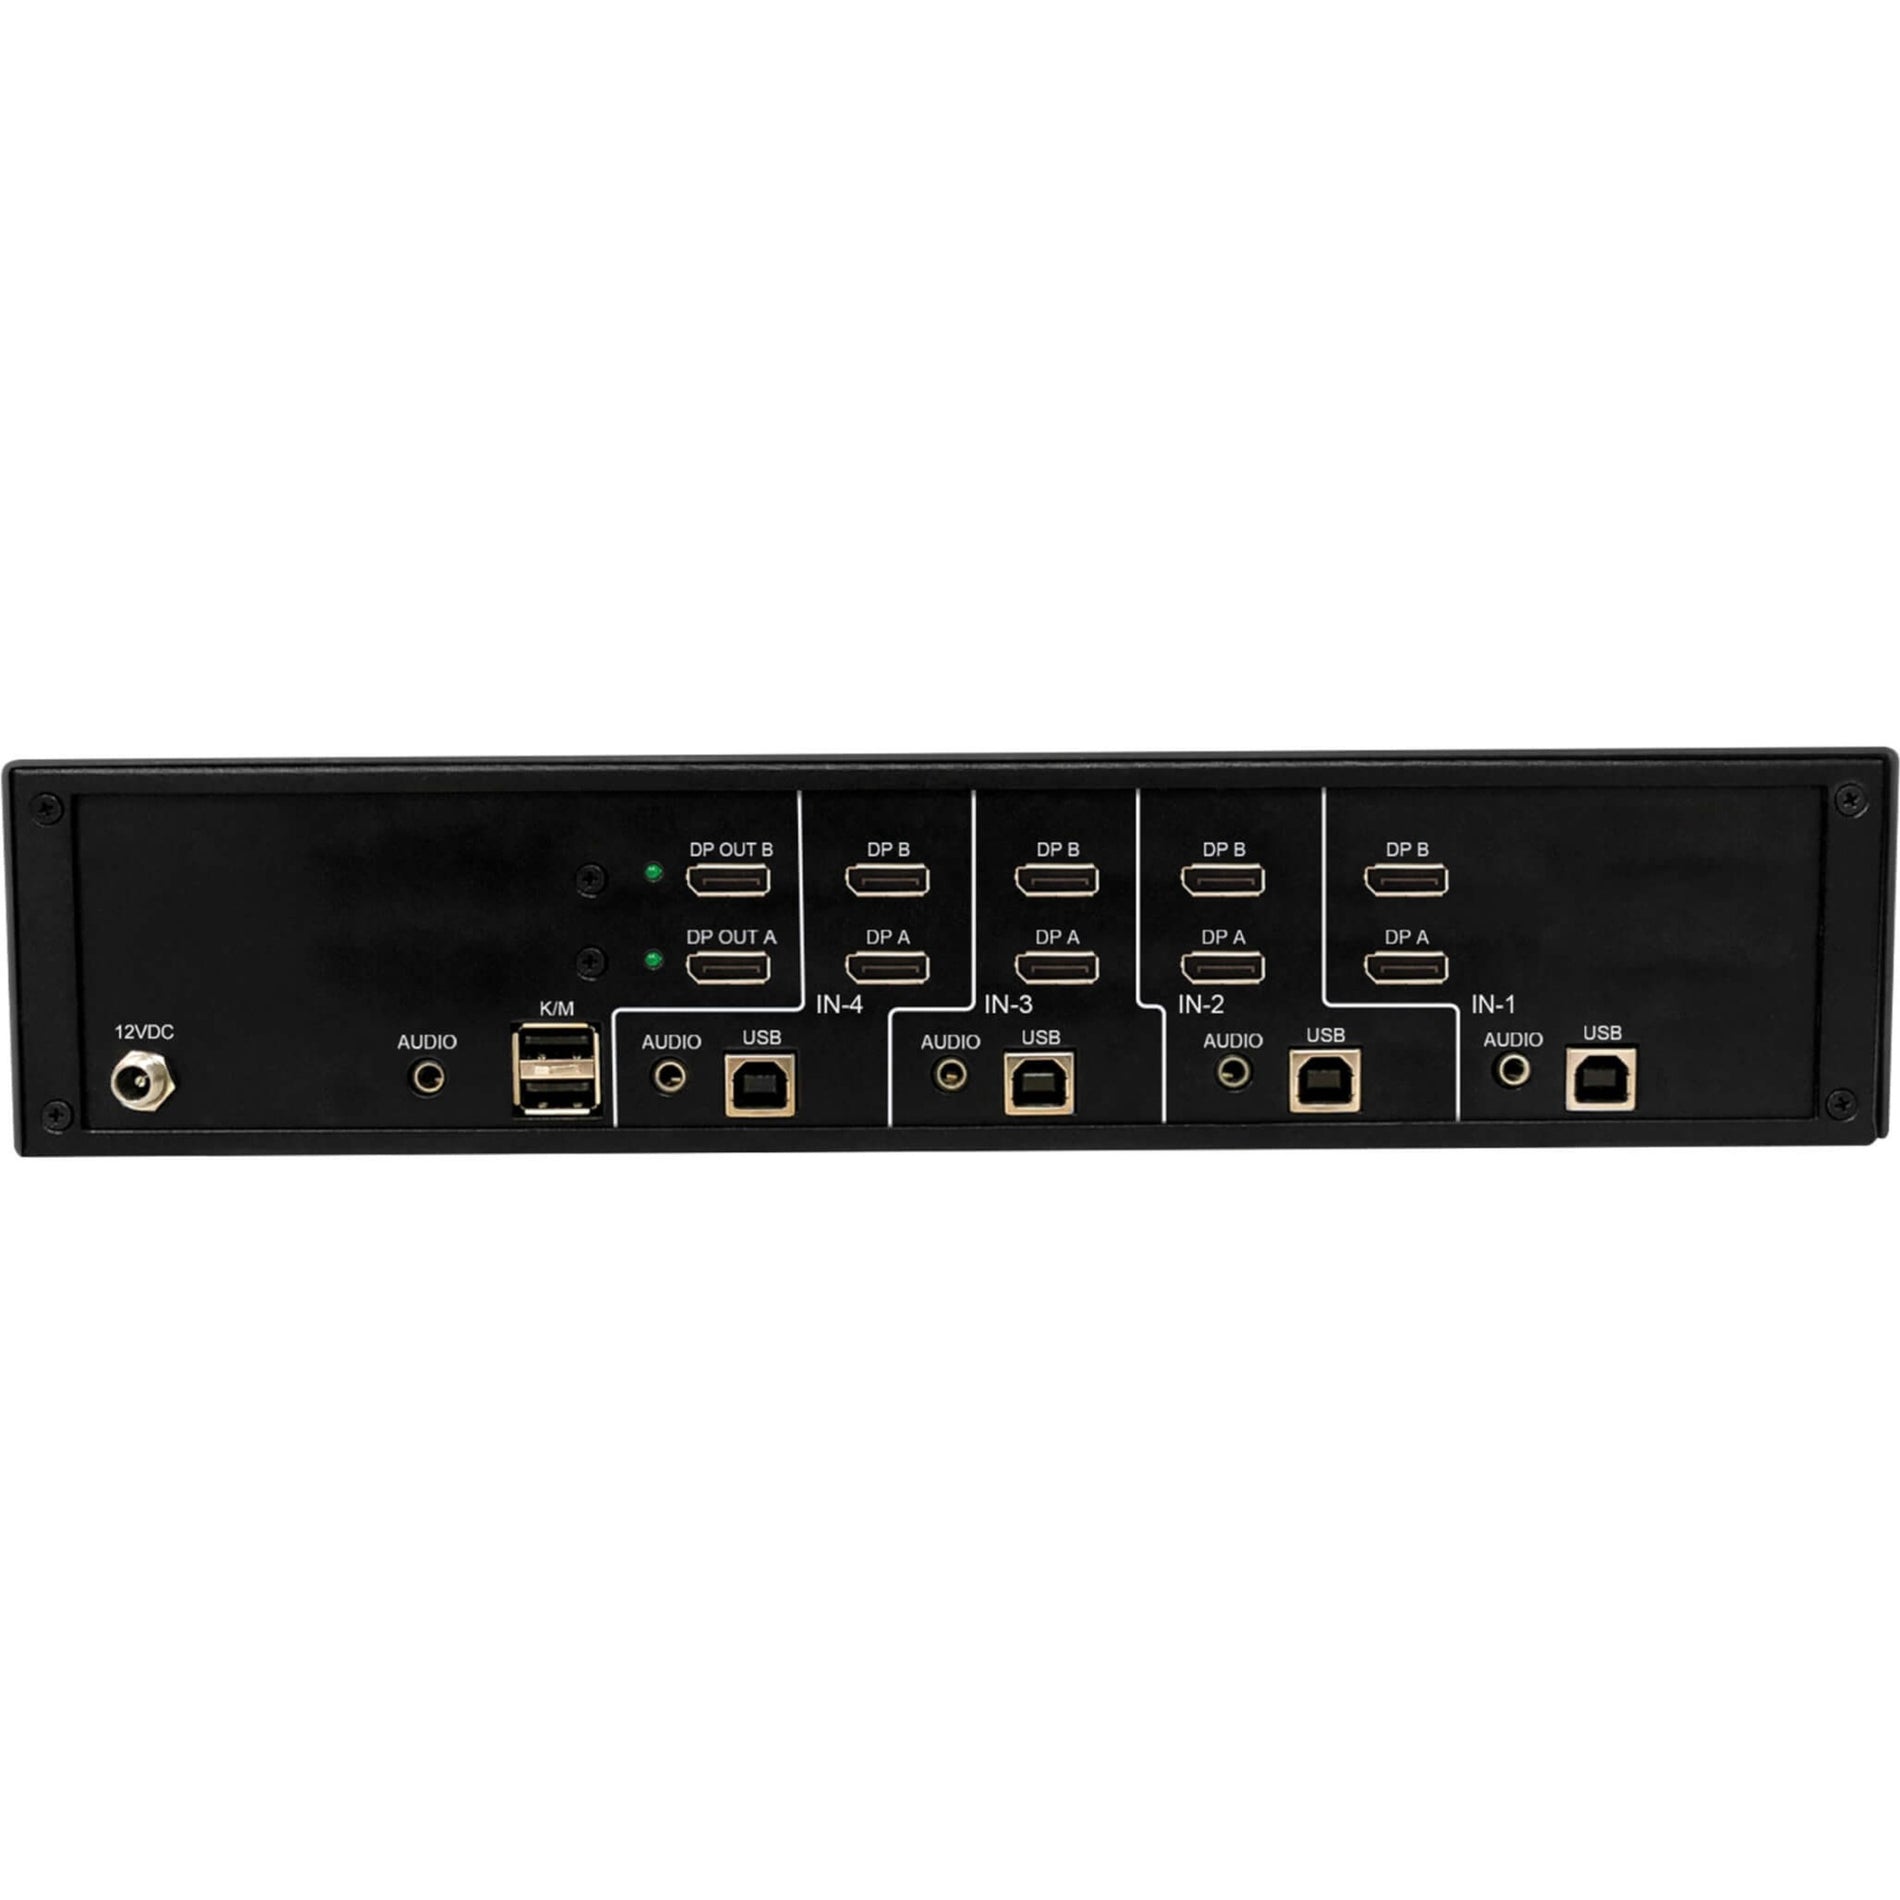 Tripp Lite B002-DP2A4-N4 4-Port Dual-Monitor NIAP PP4.0-Certified DisplayPort KVM Switch, 3840 x 2160 Resolution, 3 Year Warranty